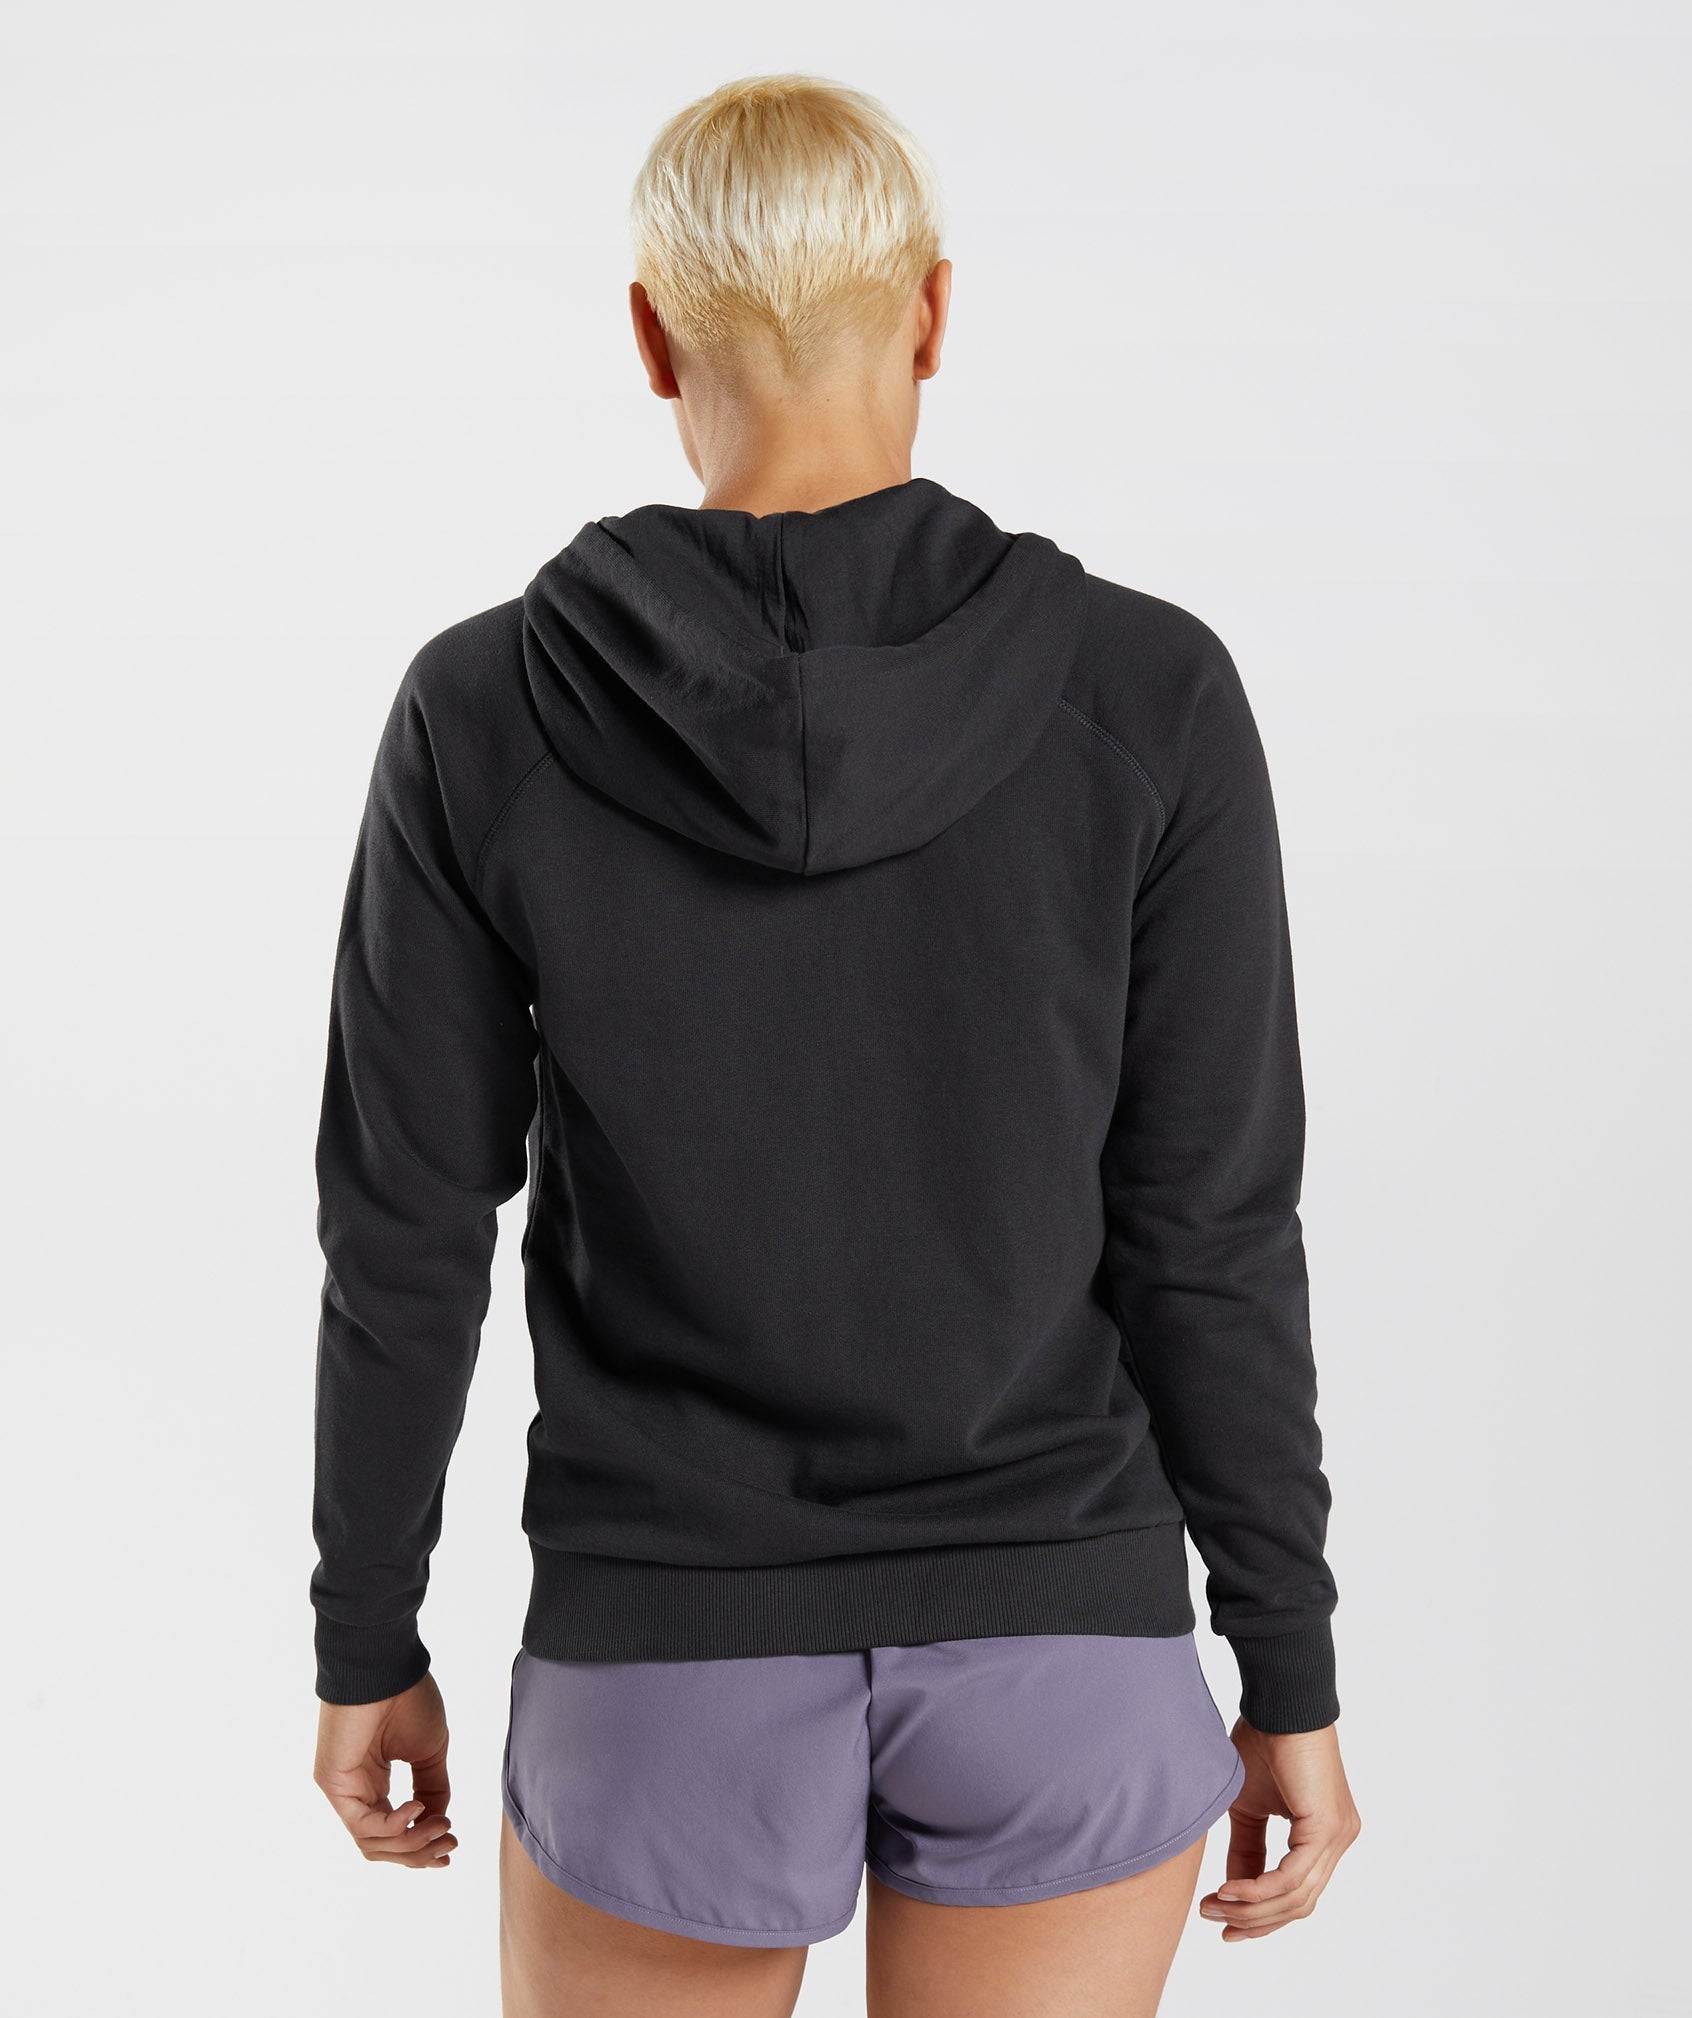 Hibelle Zippered Sweatshirt Without Hood, Full Zipper Seamless Casual  Lounge Sweatshirt Fitness Comfy Jackets Woman Gym Lightwei